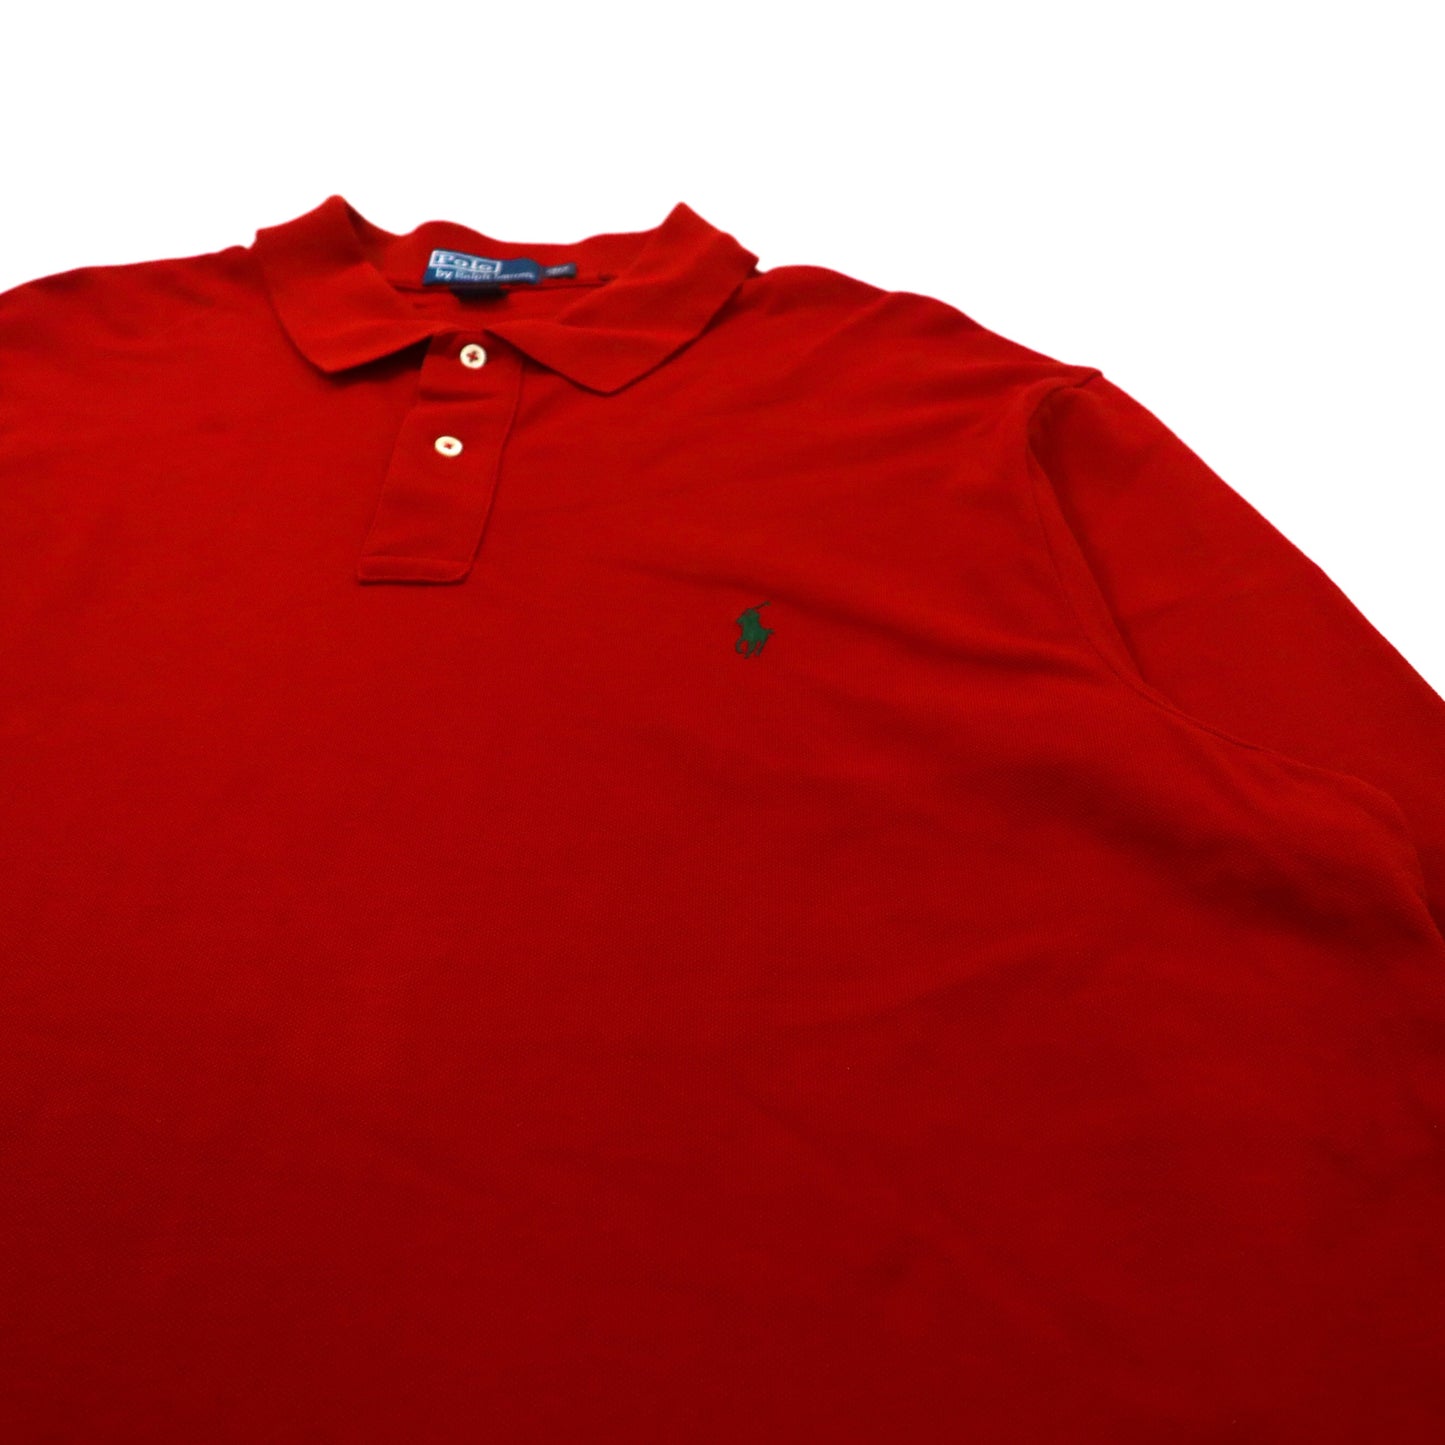 Polo by Ralph Lauren ビッグサイズ 長袖ポロシャツ 2XLT レッド コットン 鹿の子 スモールポニー刺繍